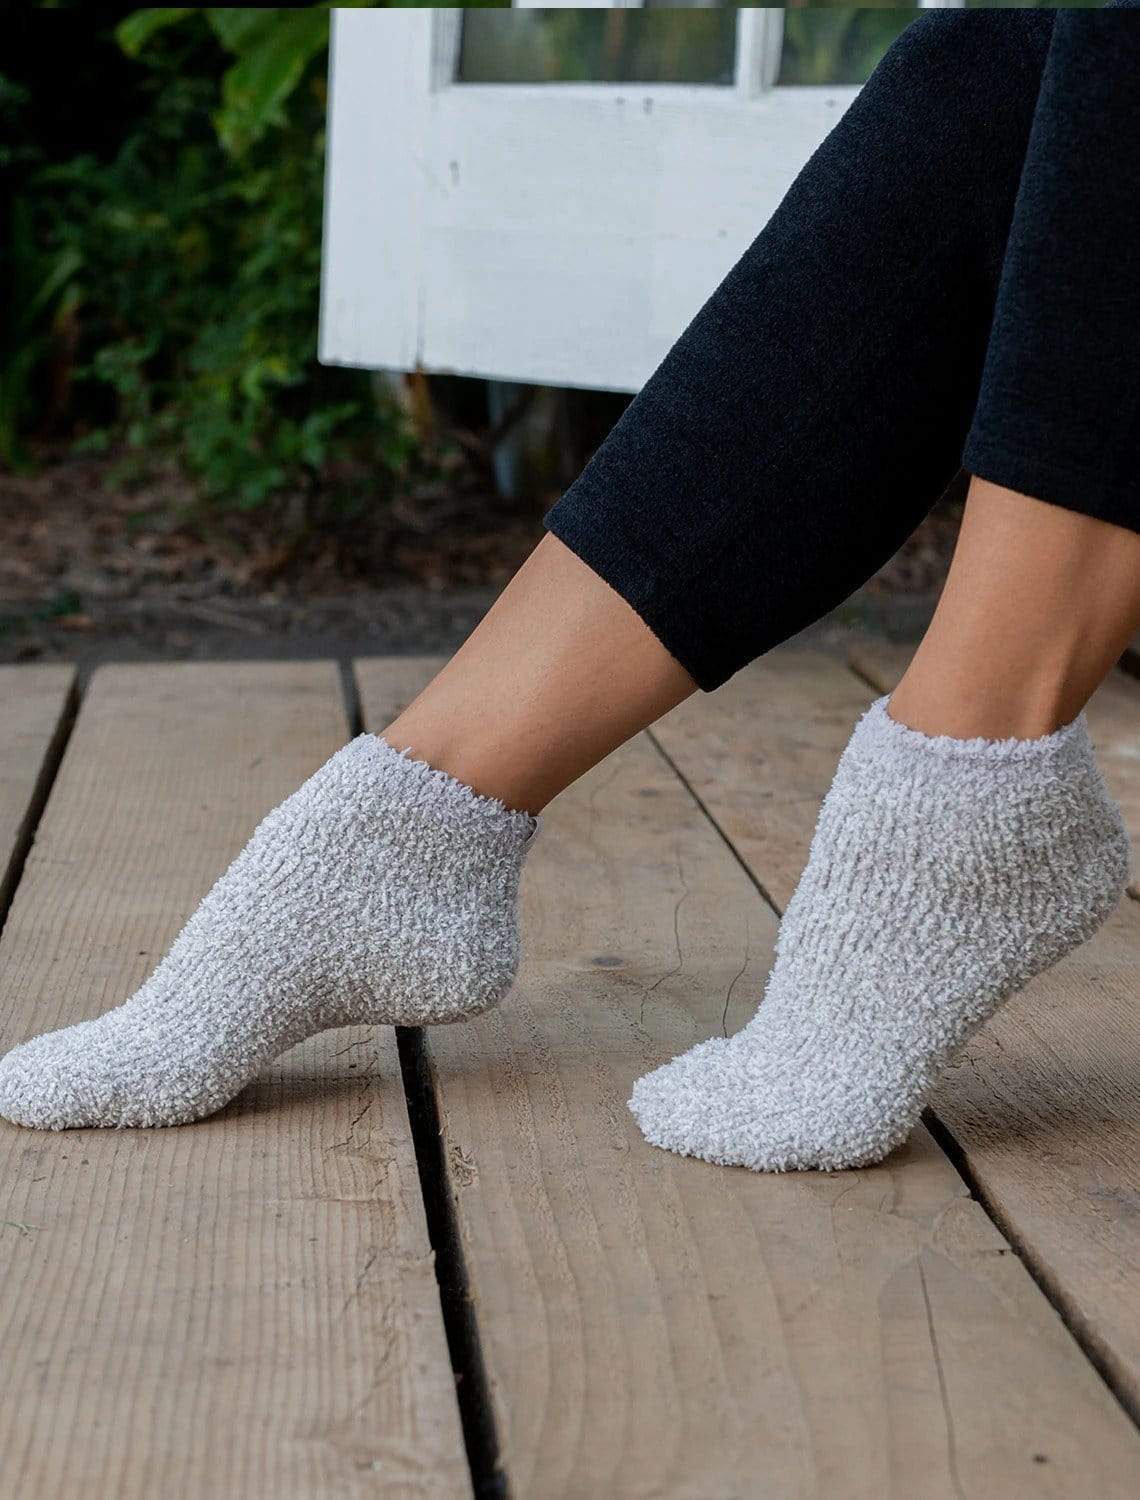 Barefoot Dreams CozyChic® Socks - Graphite/Carbon Cheetah Print – Carolina  Girls